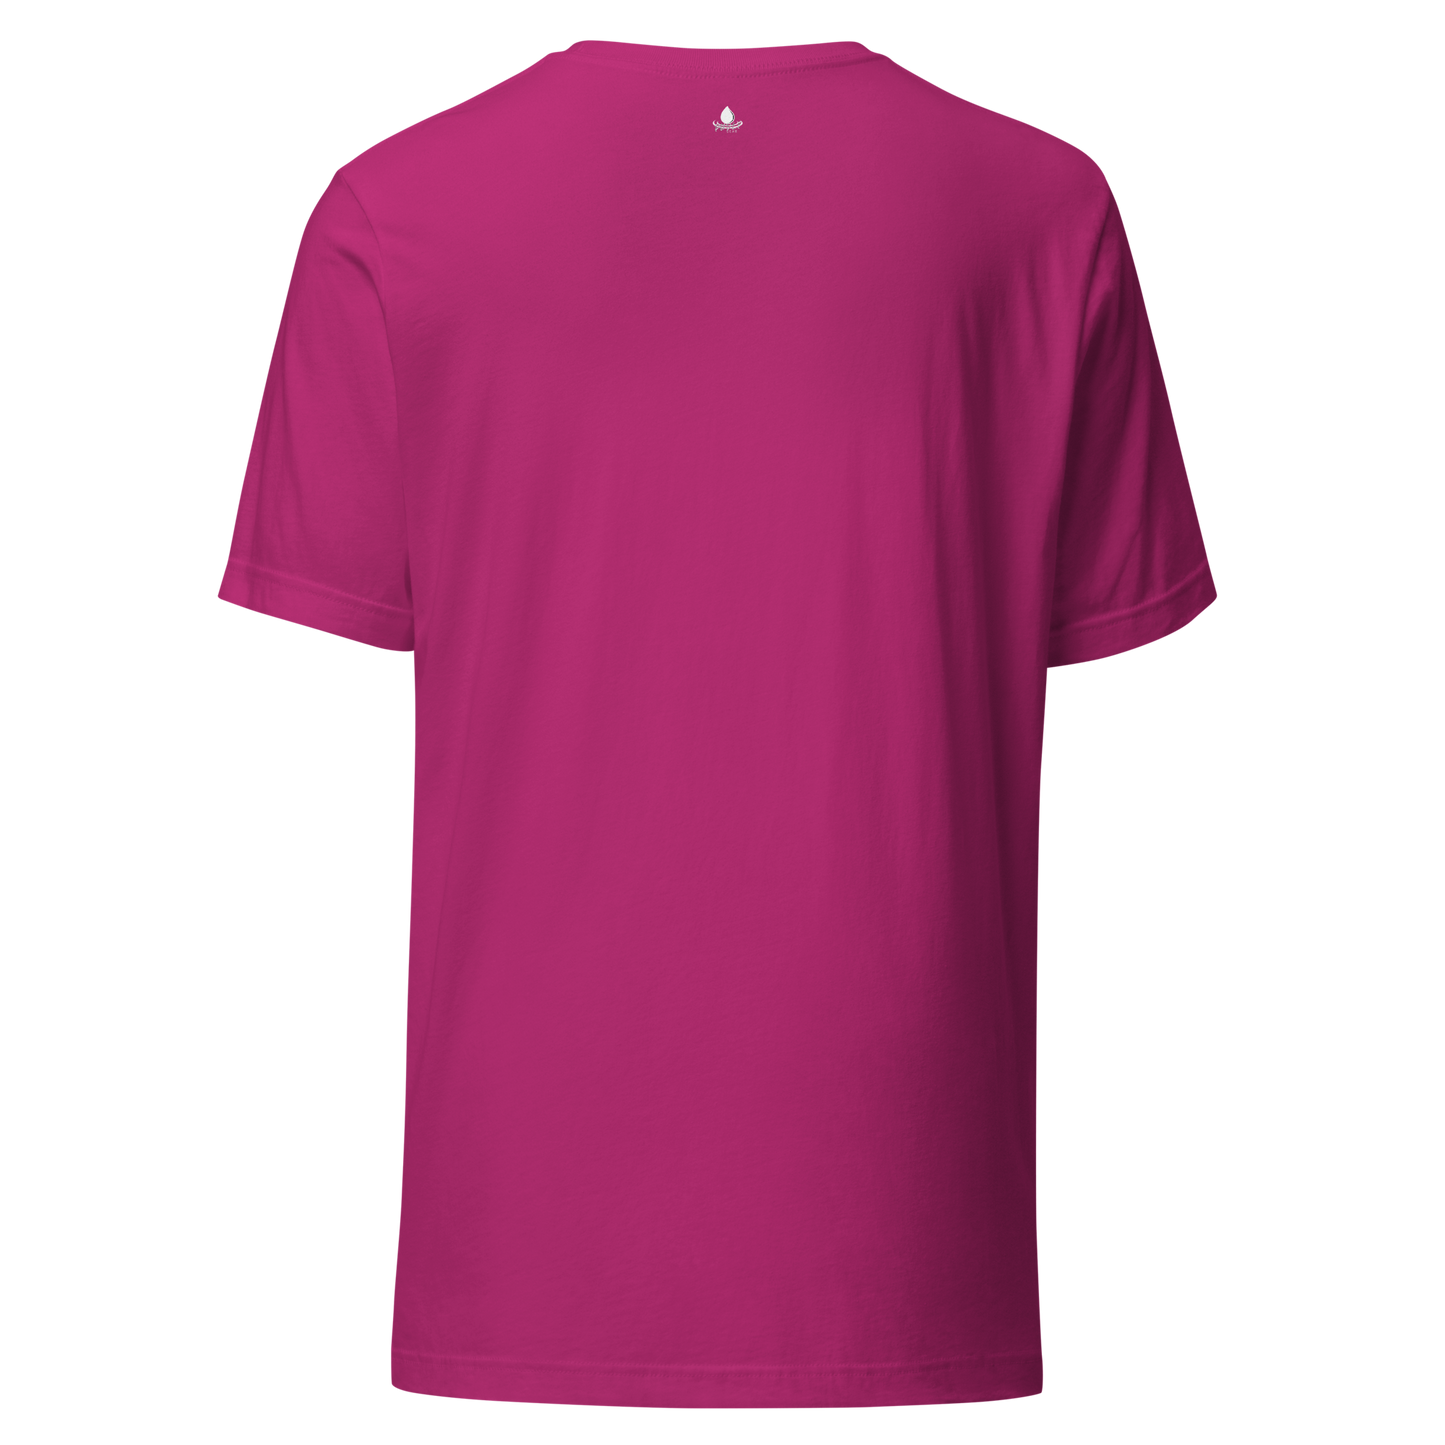 TurBEERdity Unisex T-Shirt (light on dark)